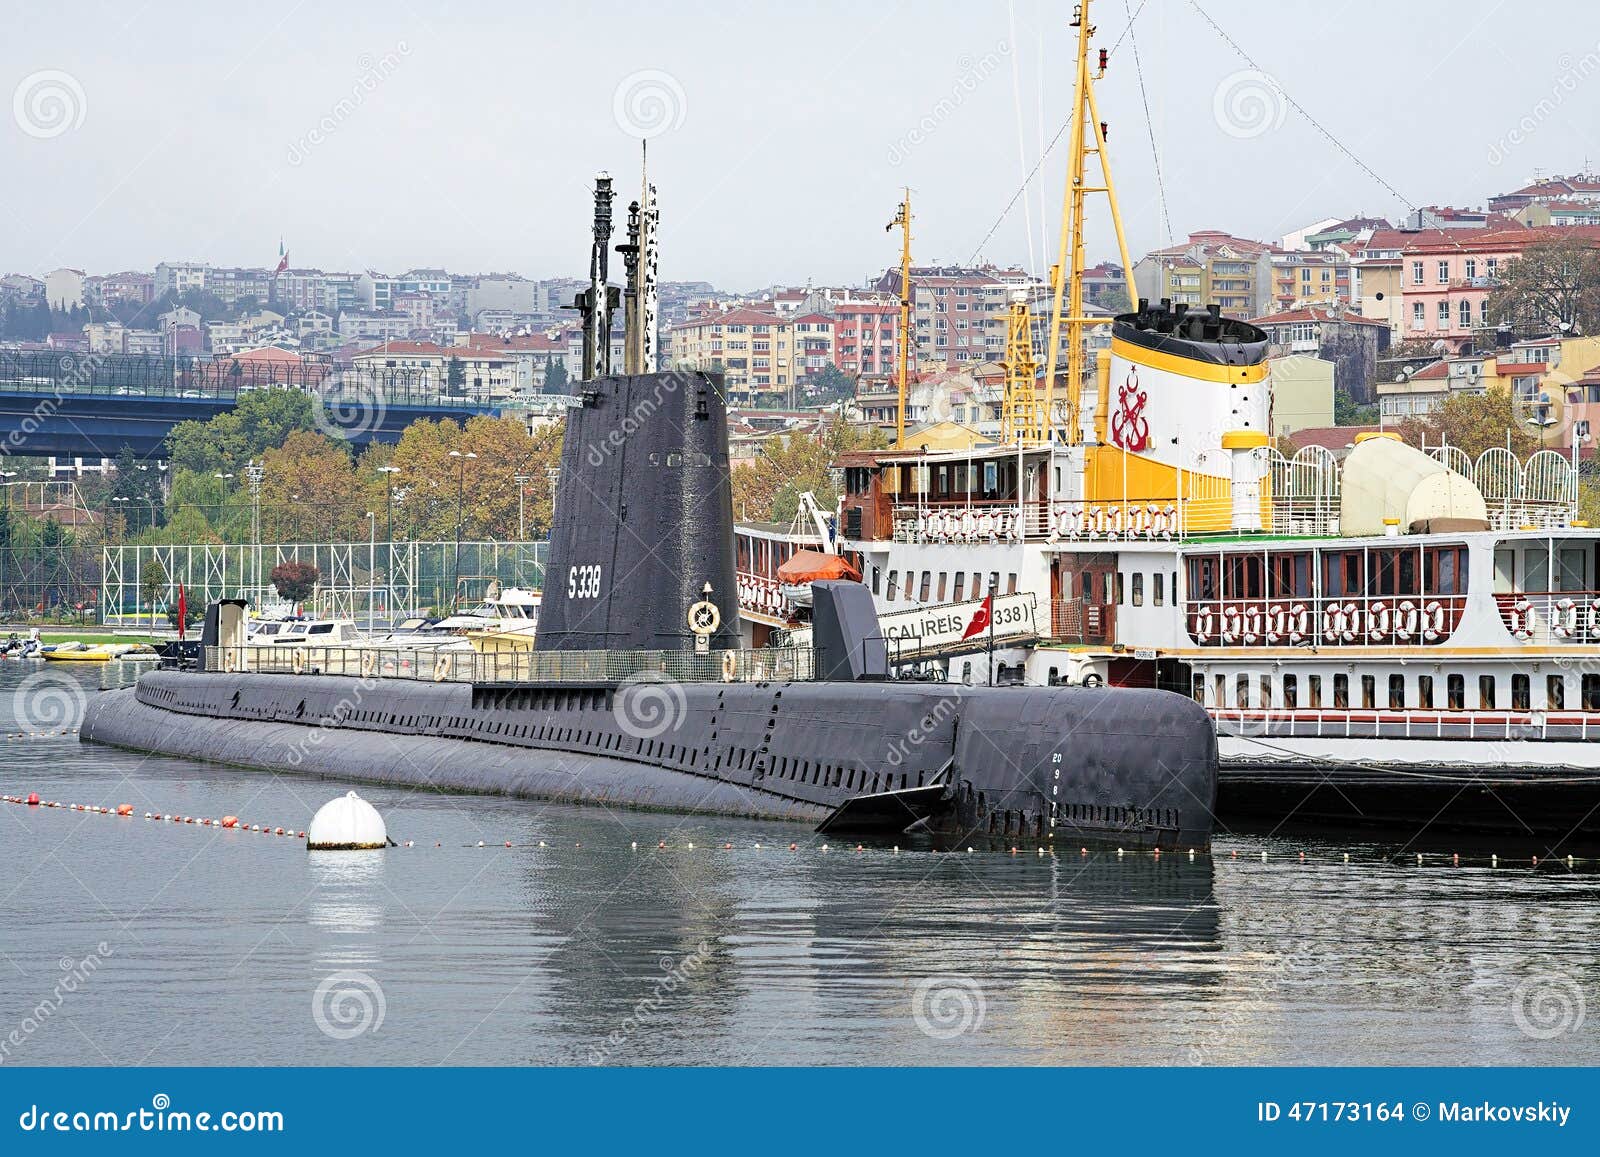 Submarine moored at the Rahmi M Koc Museum in Istanbul Turkey